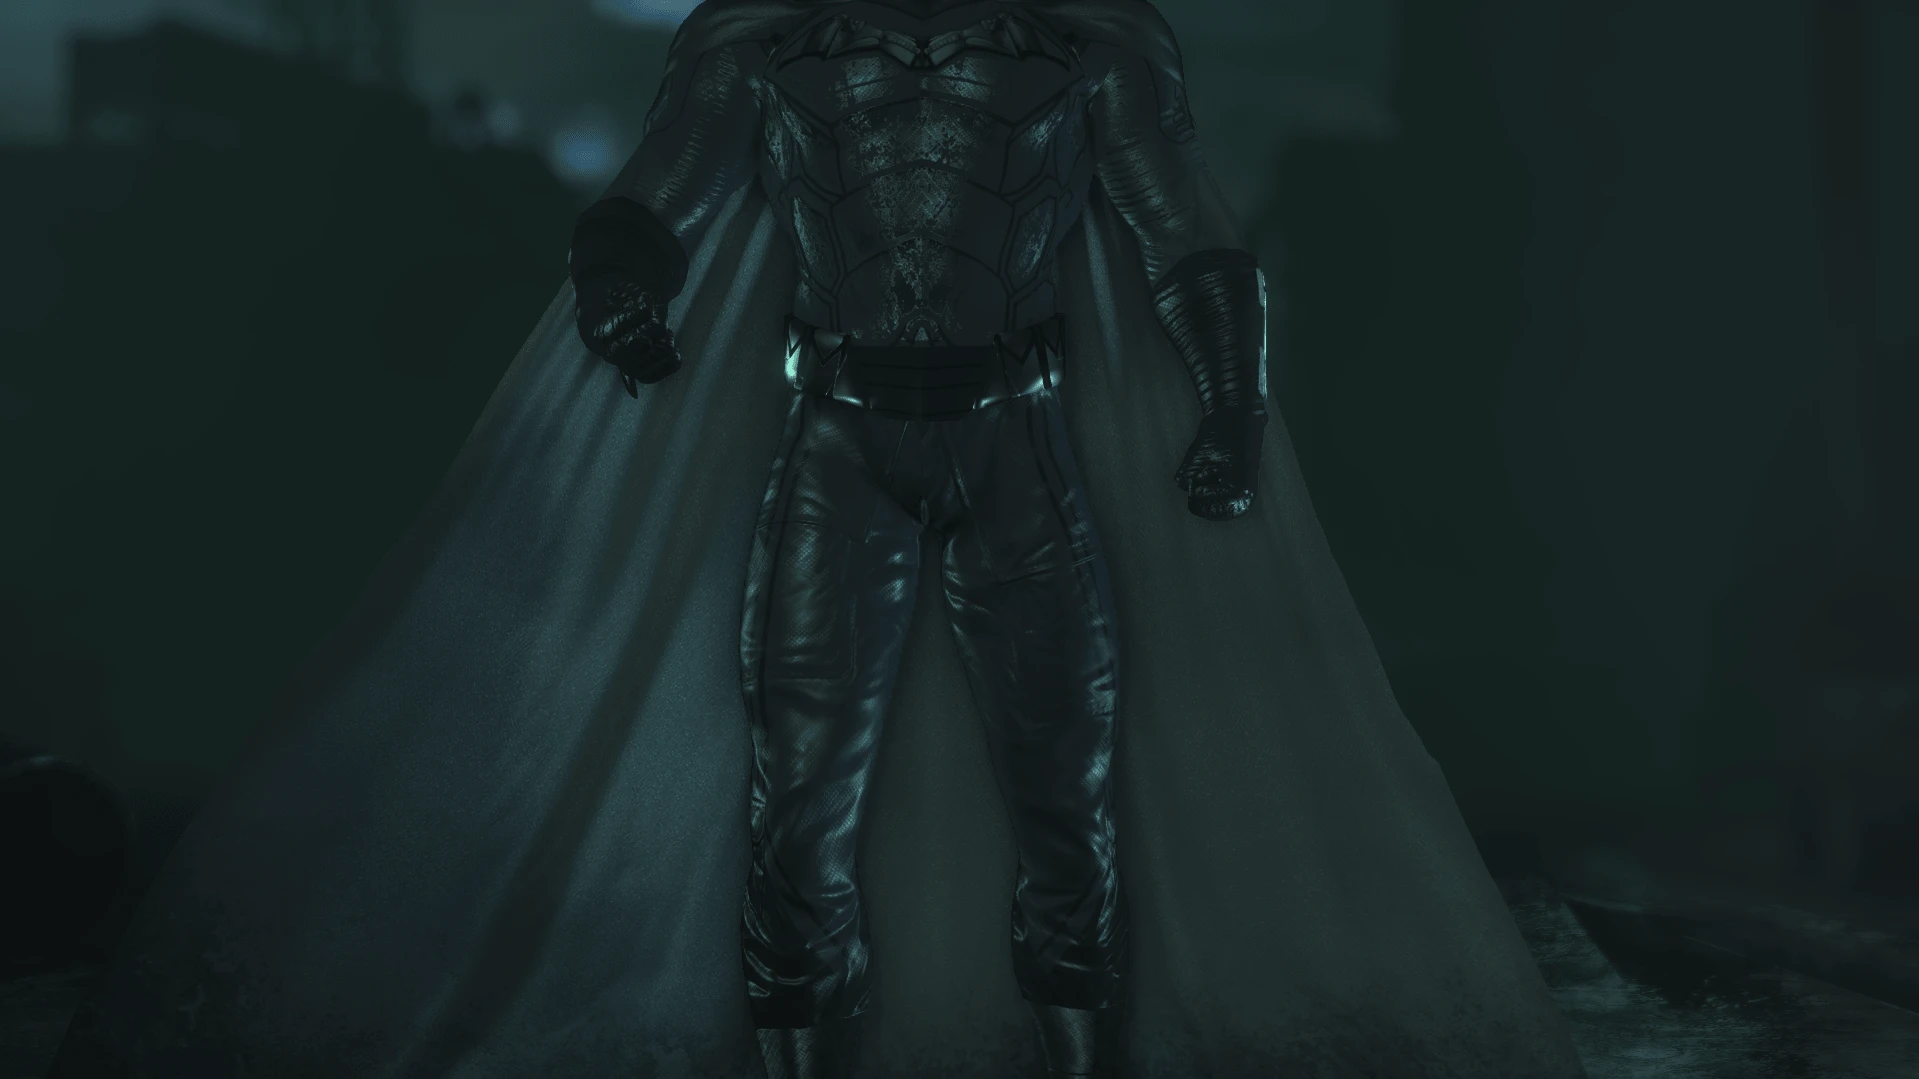 Batman Arkham City - The Batman 2021 Skin Mod at Batman: Arkham City ...
